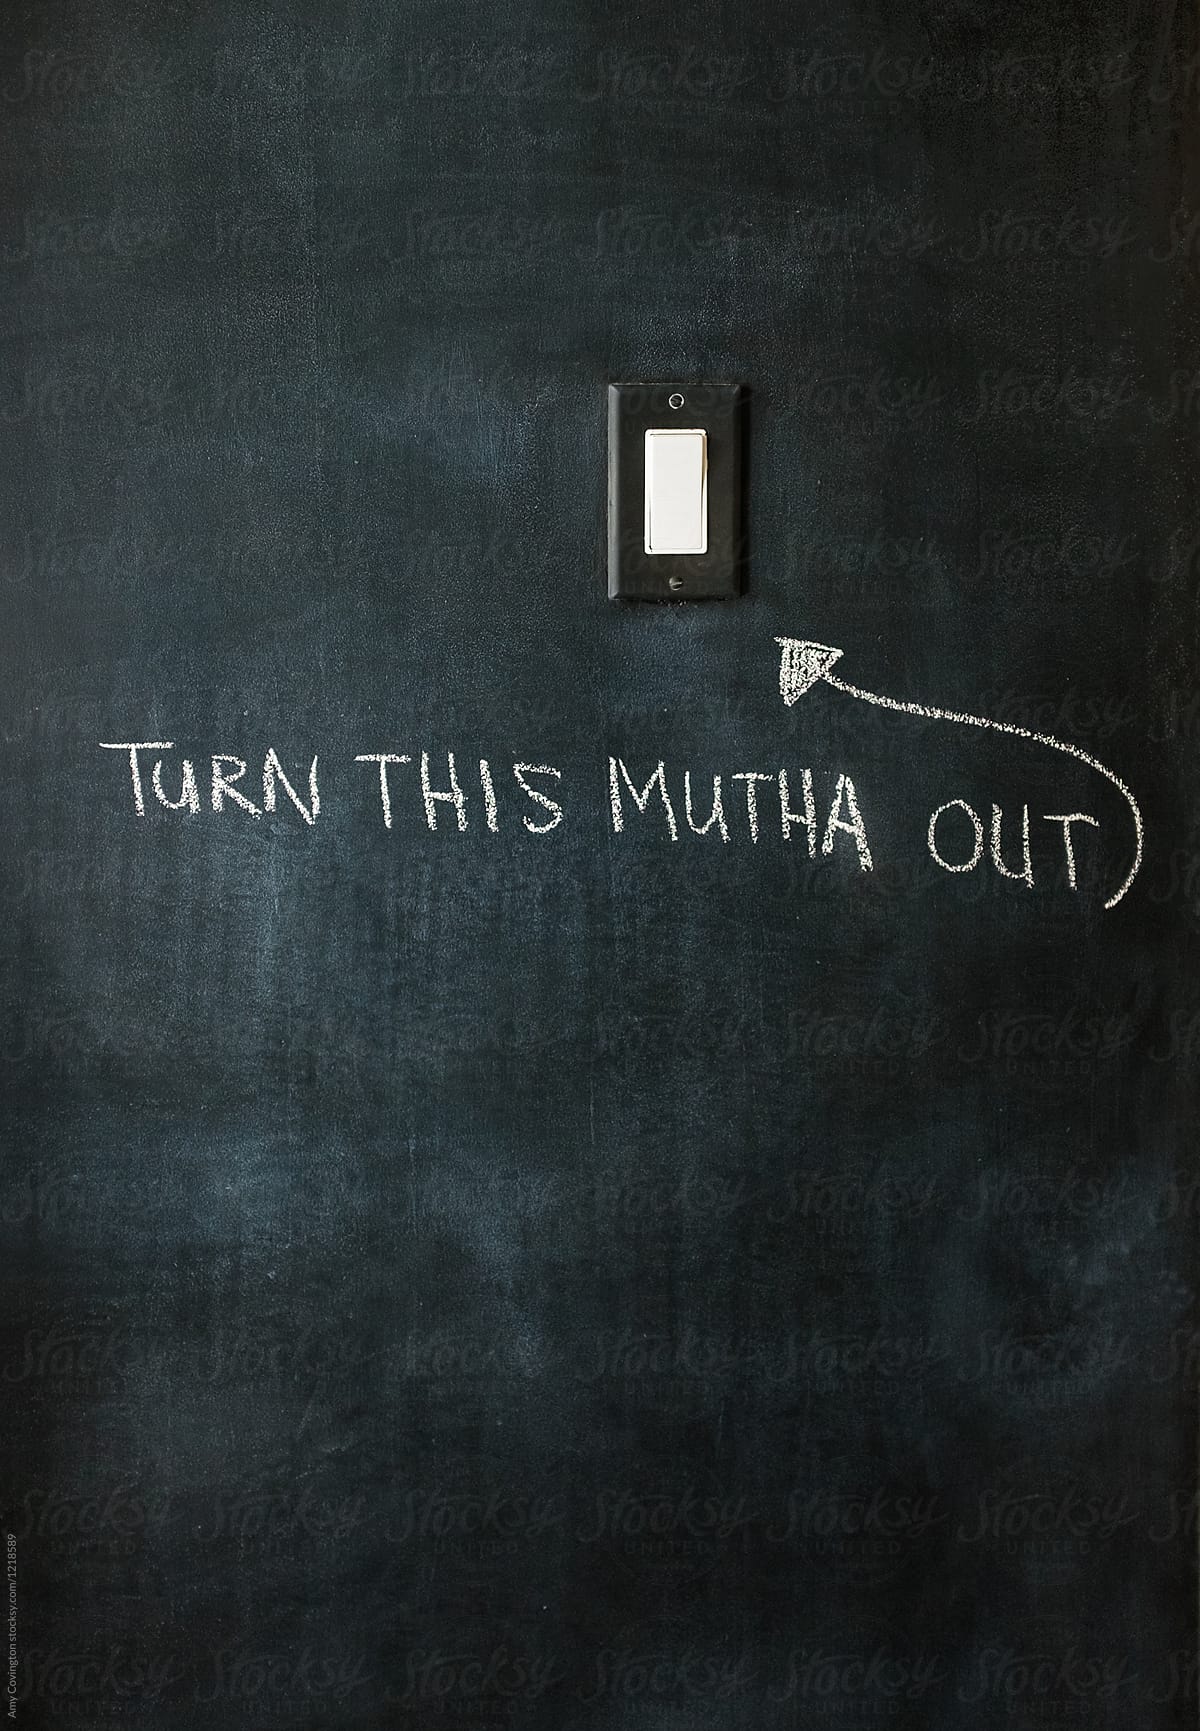 Black wall with a message written below a light switch